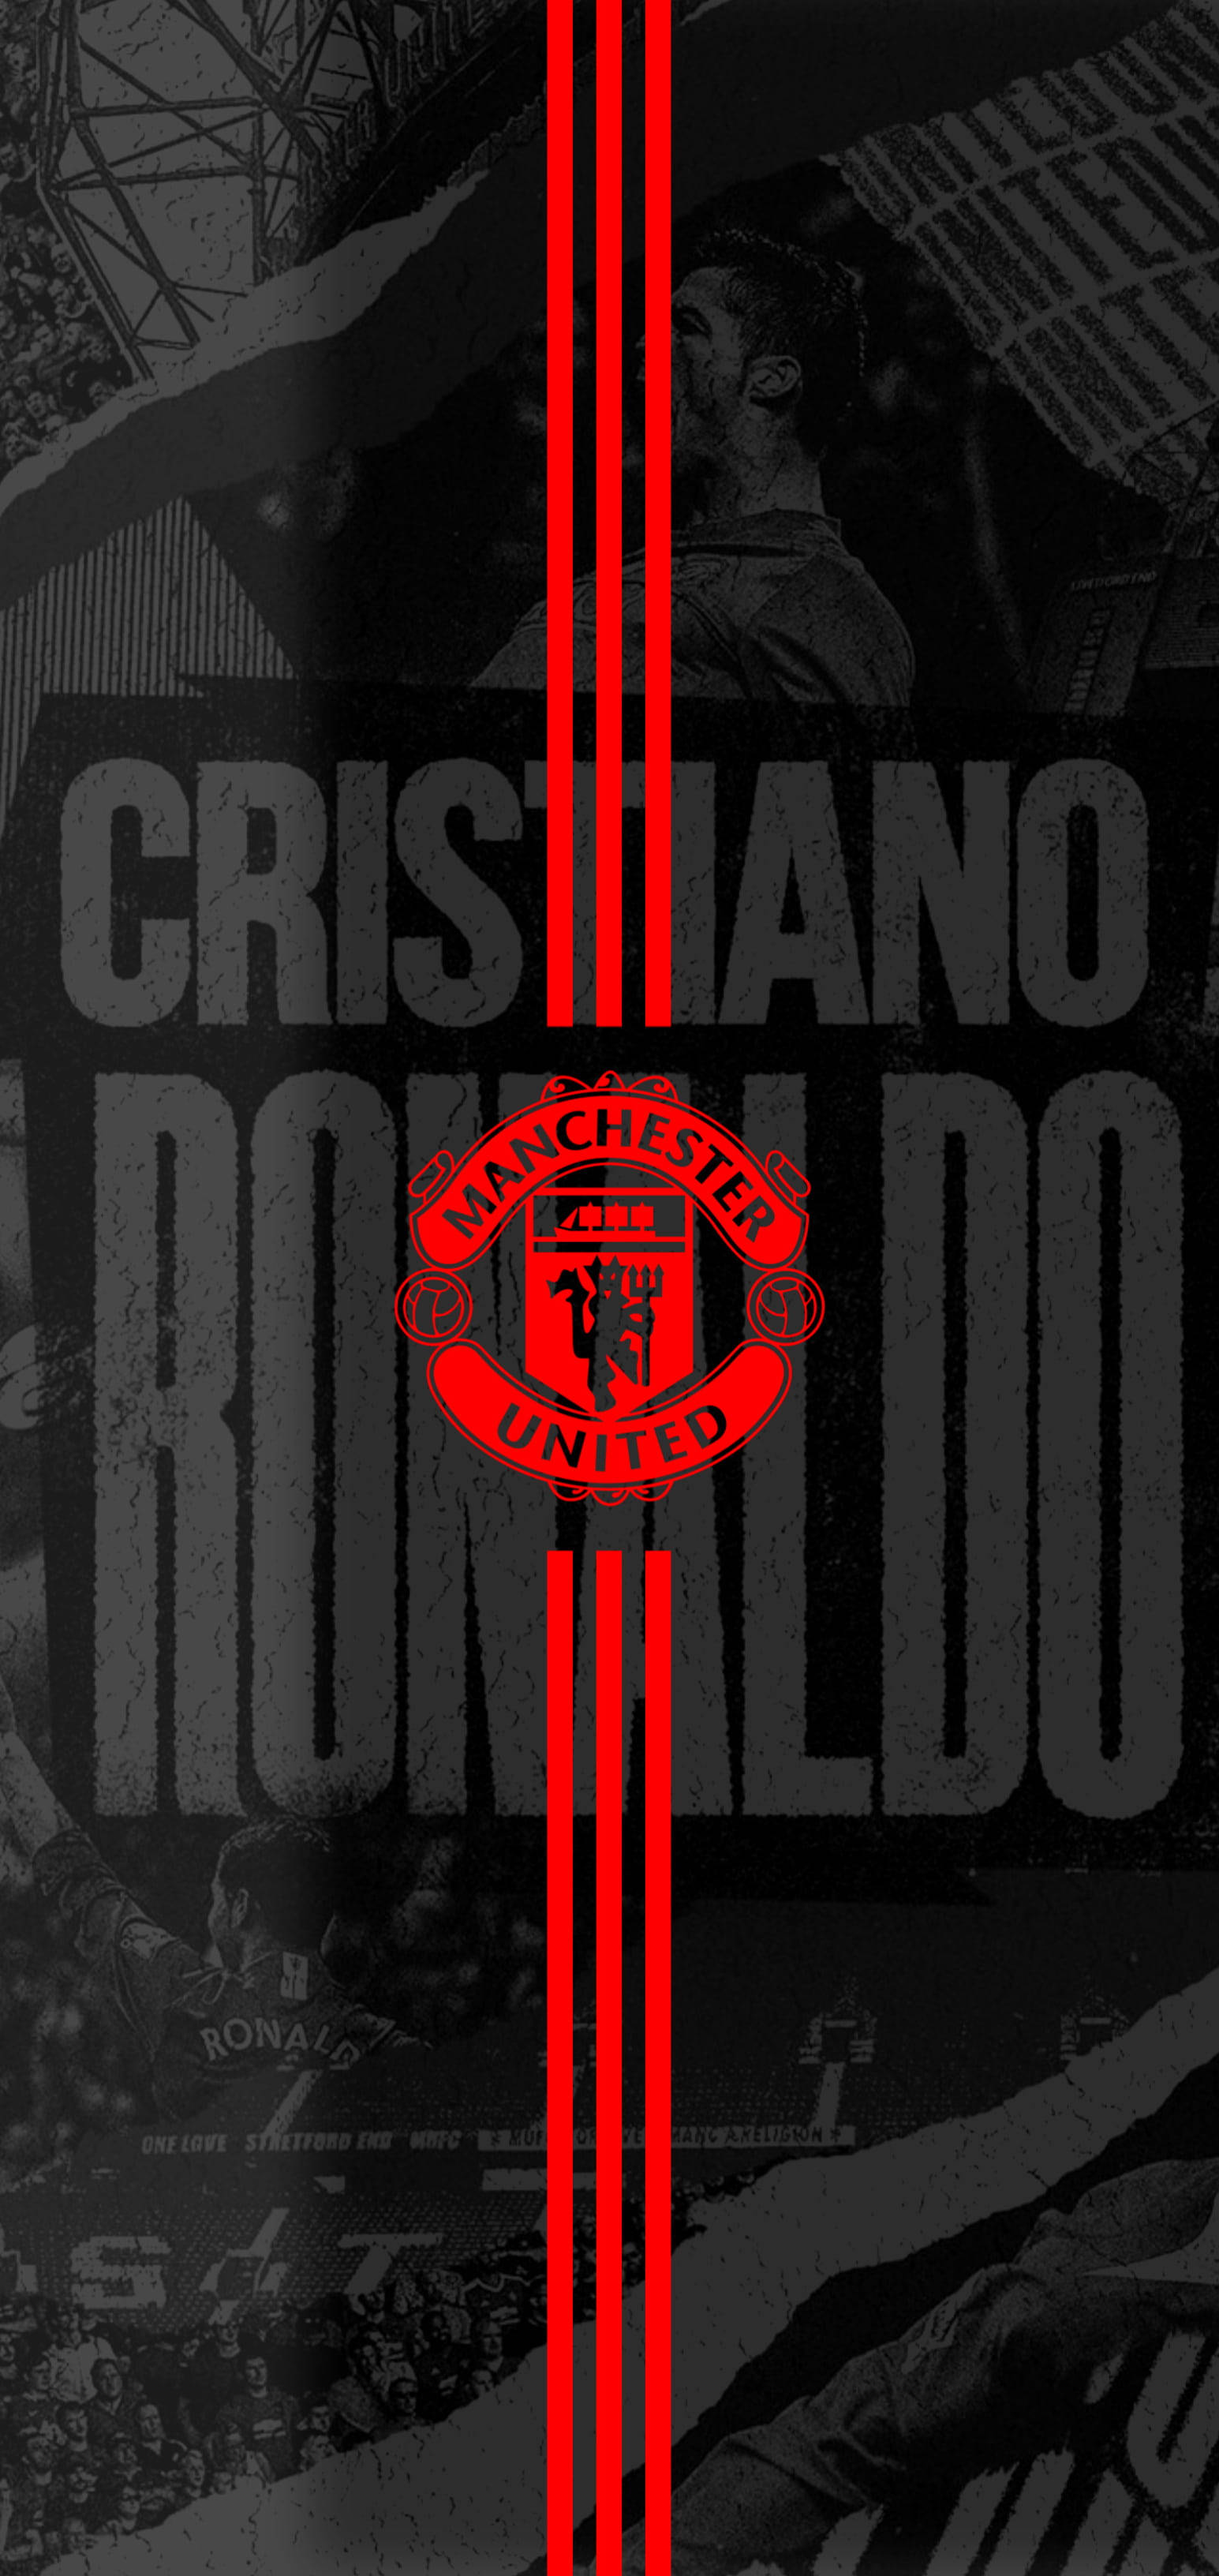 Download Cristiano Ronaldo Manchester United Mobile Wallpaper | Wallpapers .com